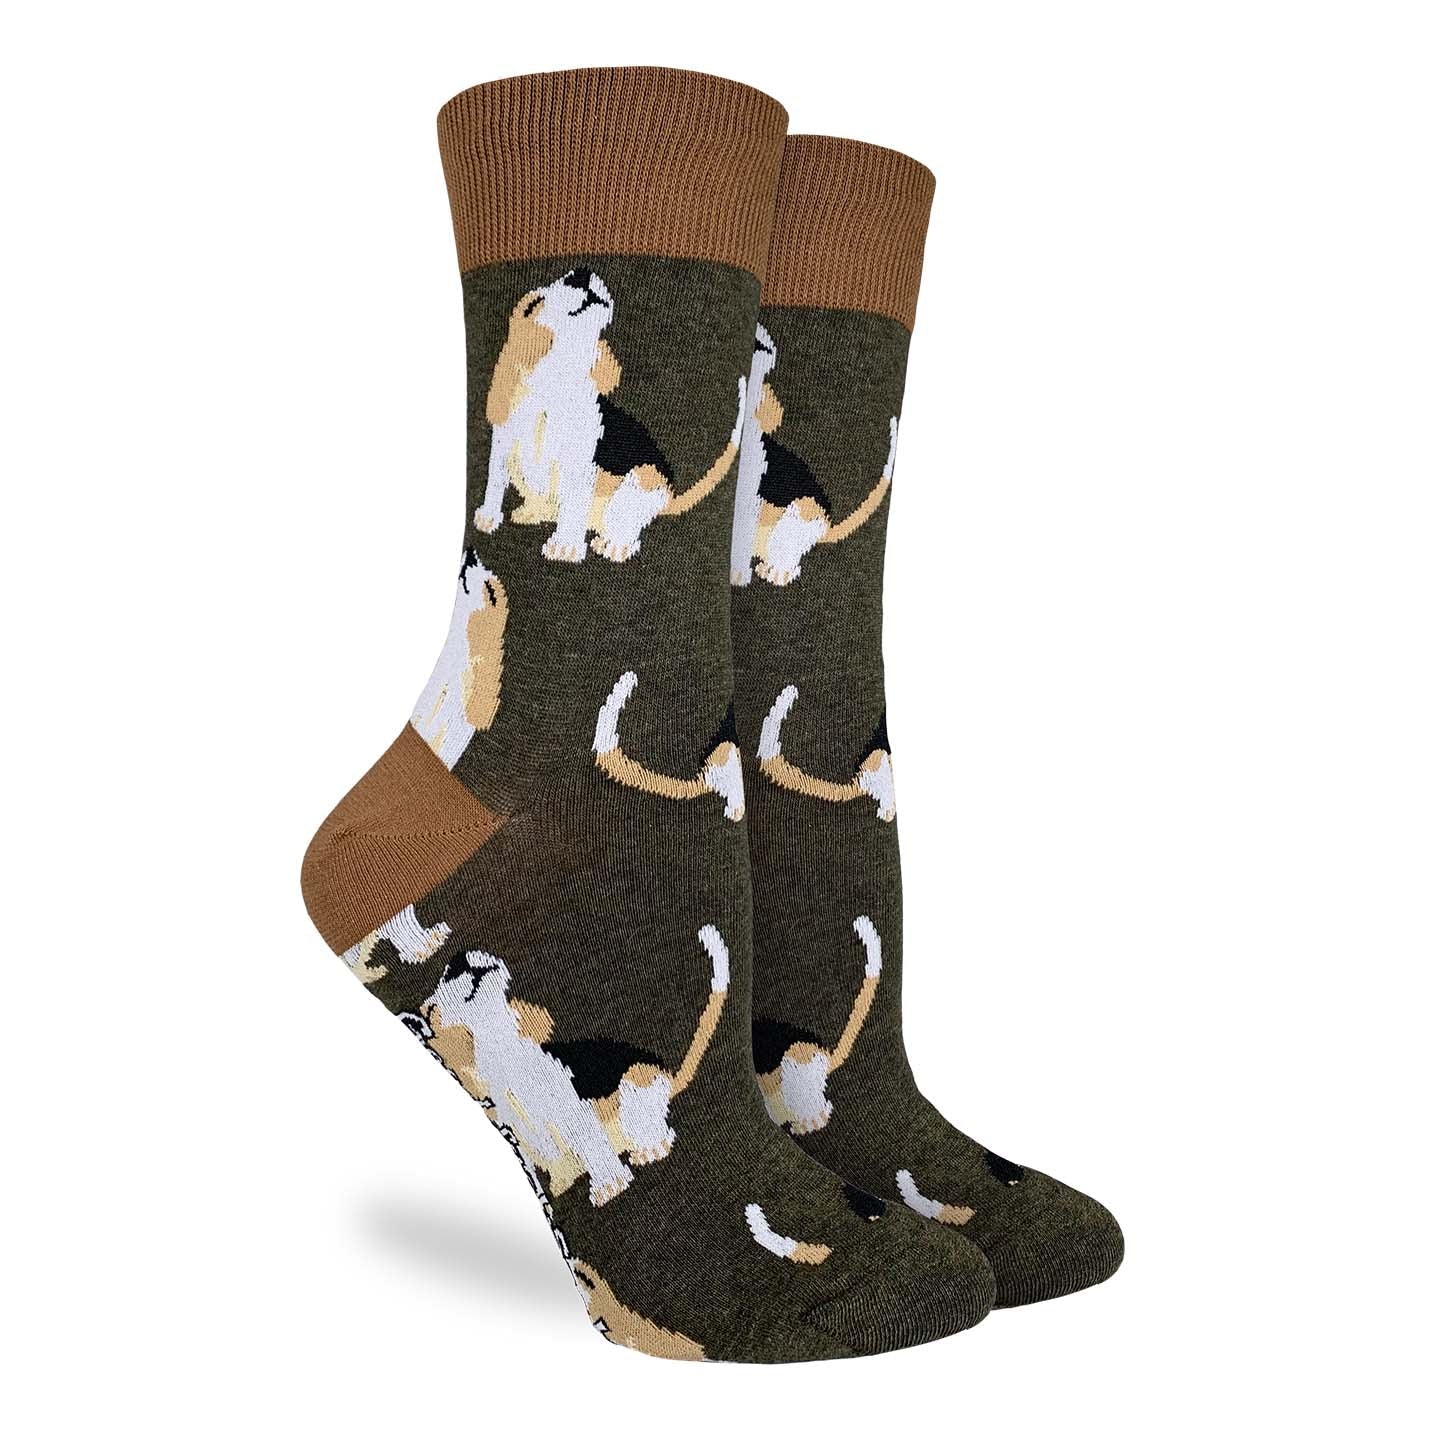 Good Luck Sock - Beagle Dog Socks